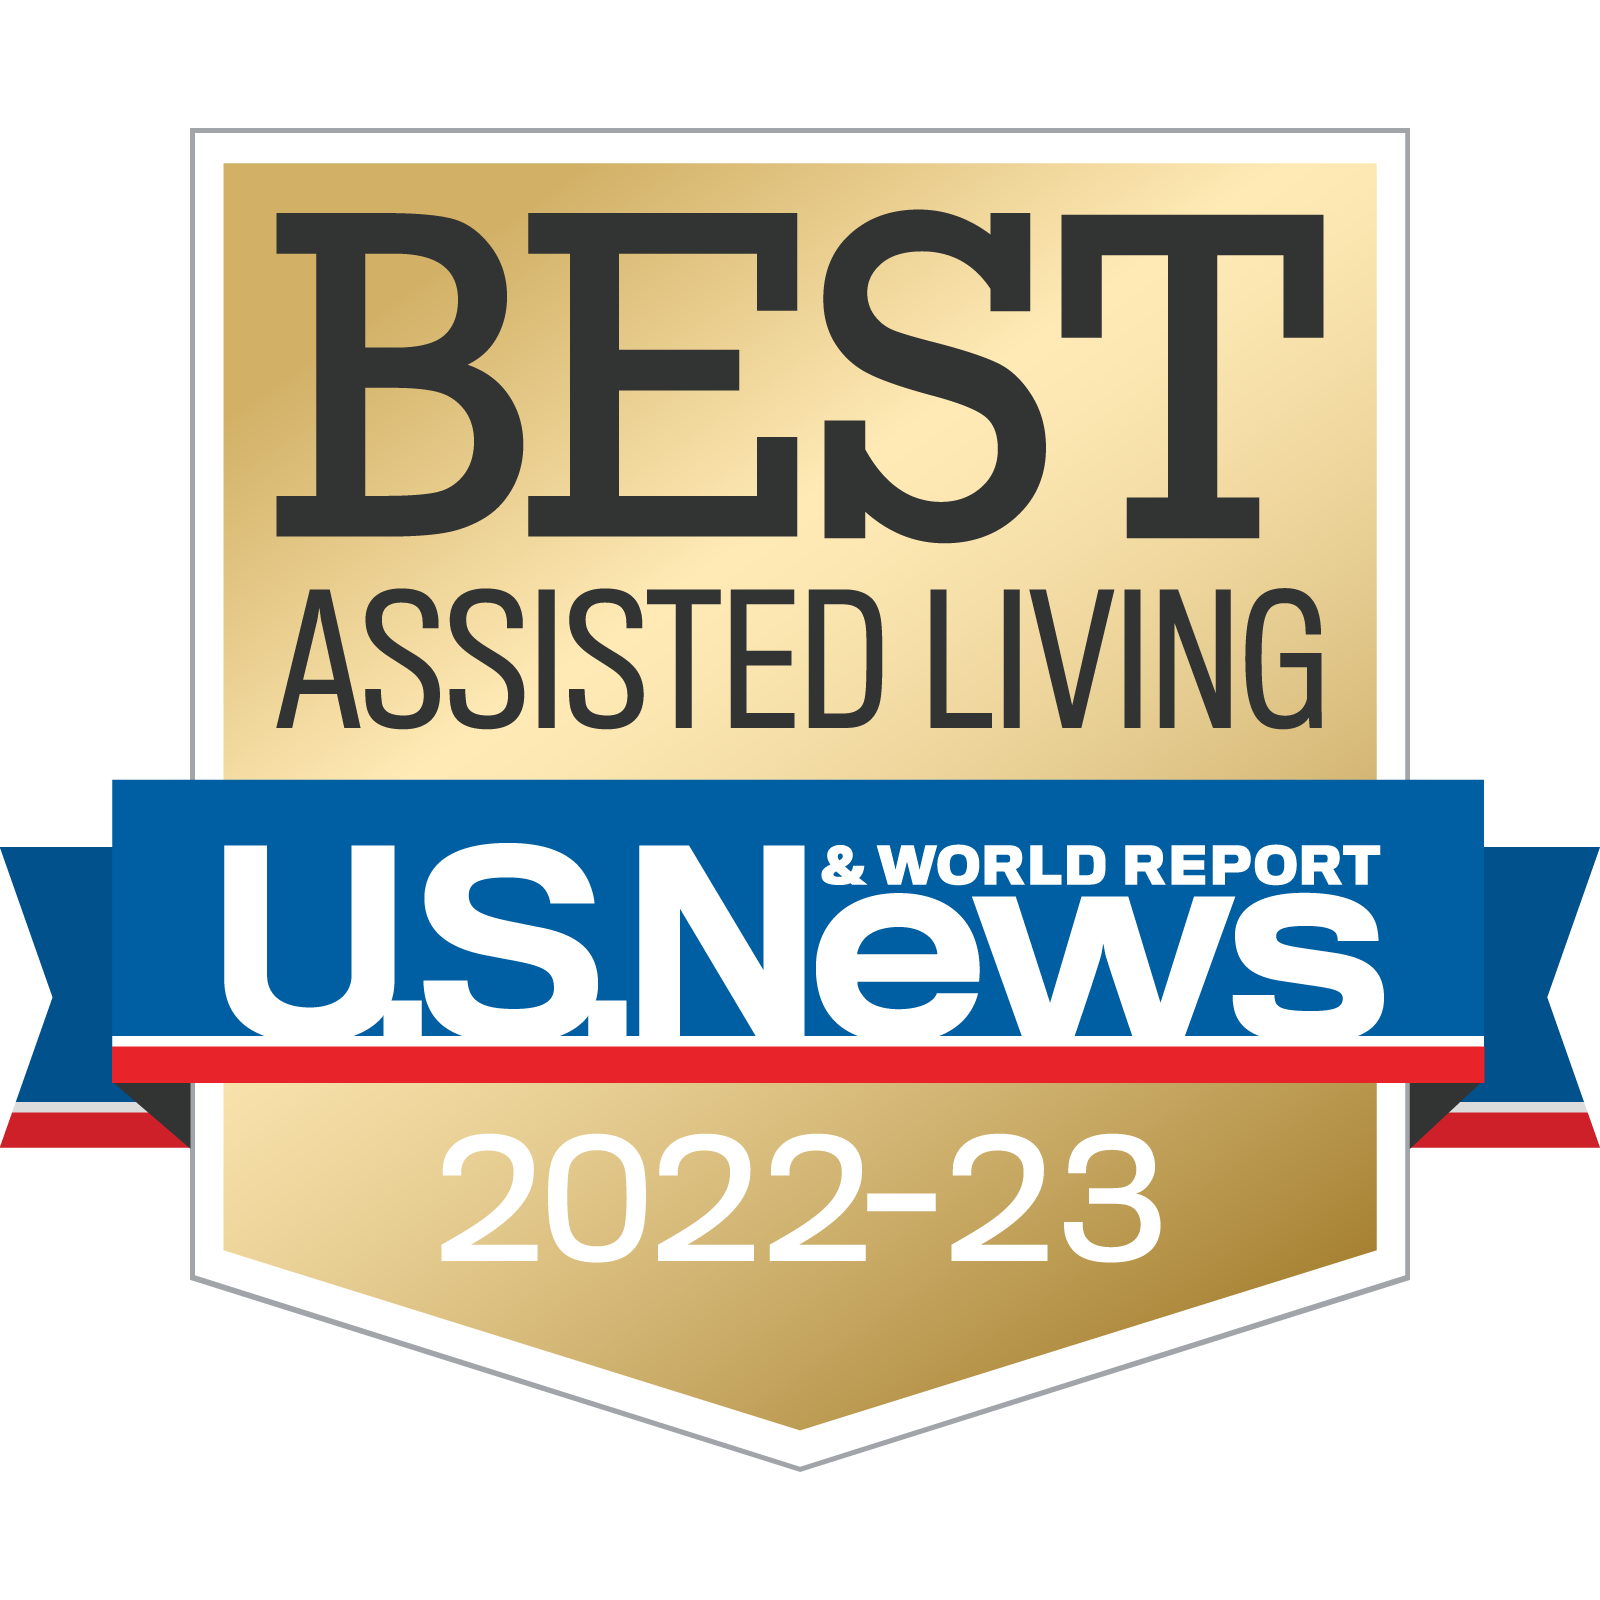 Hudson Grande Senior Living named US News Best Assisted Living